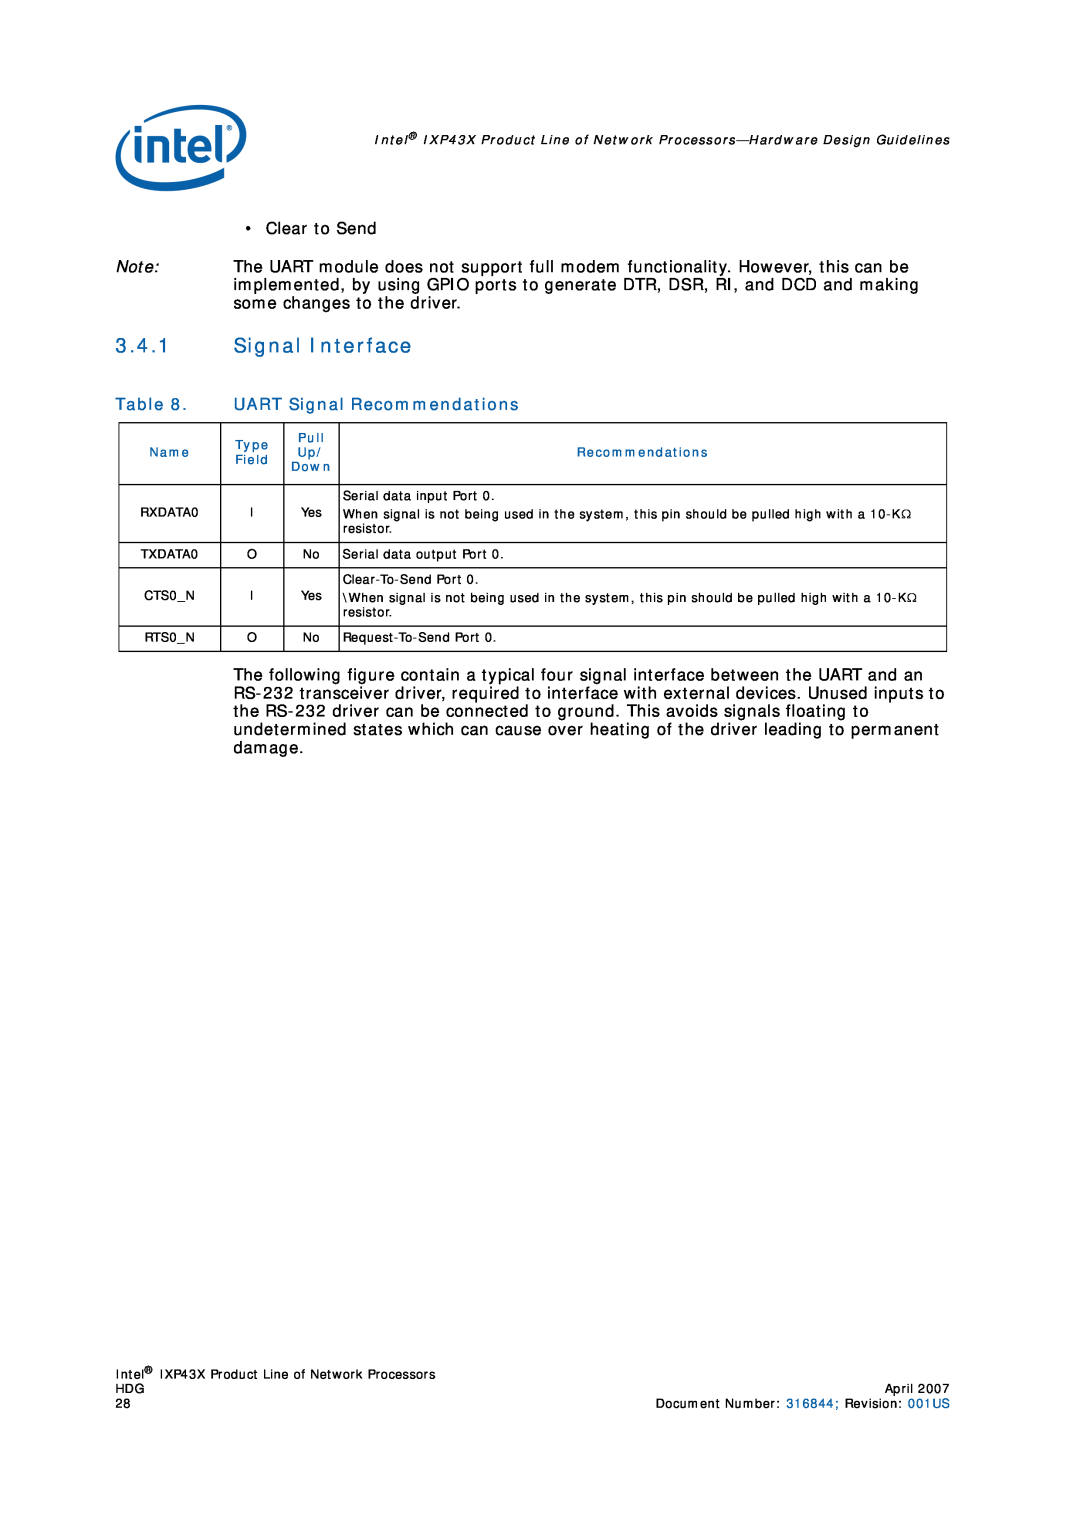 Intel IXP43X manual Signal Interface, UART Signal Recommendations 